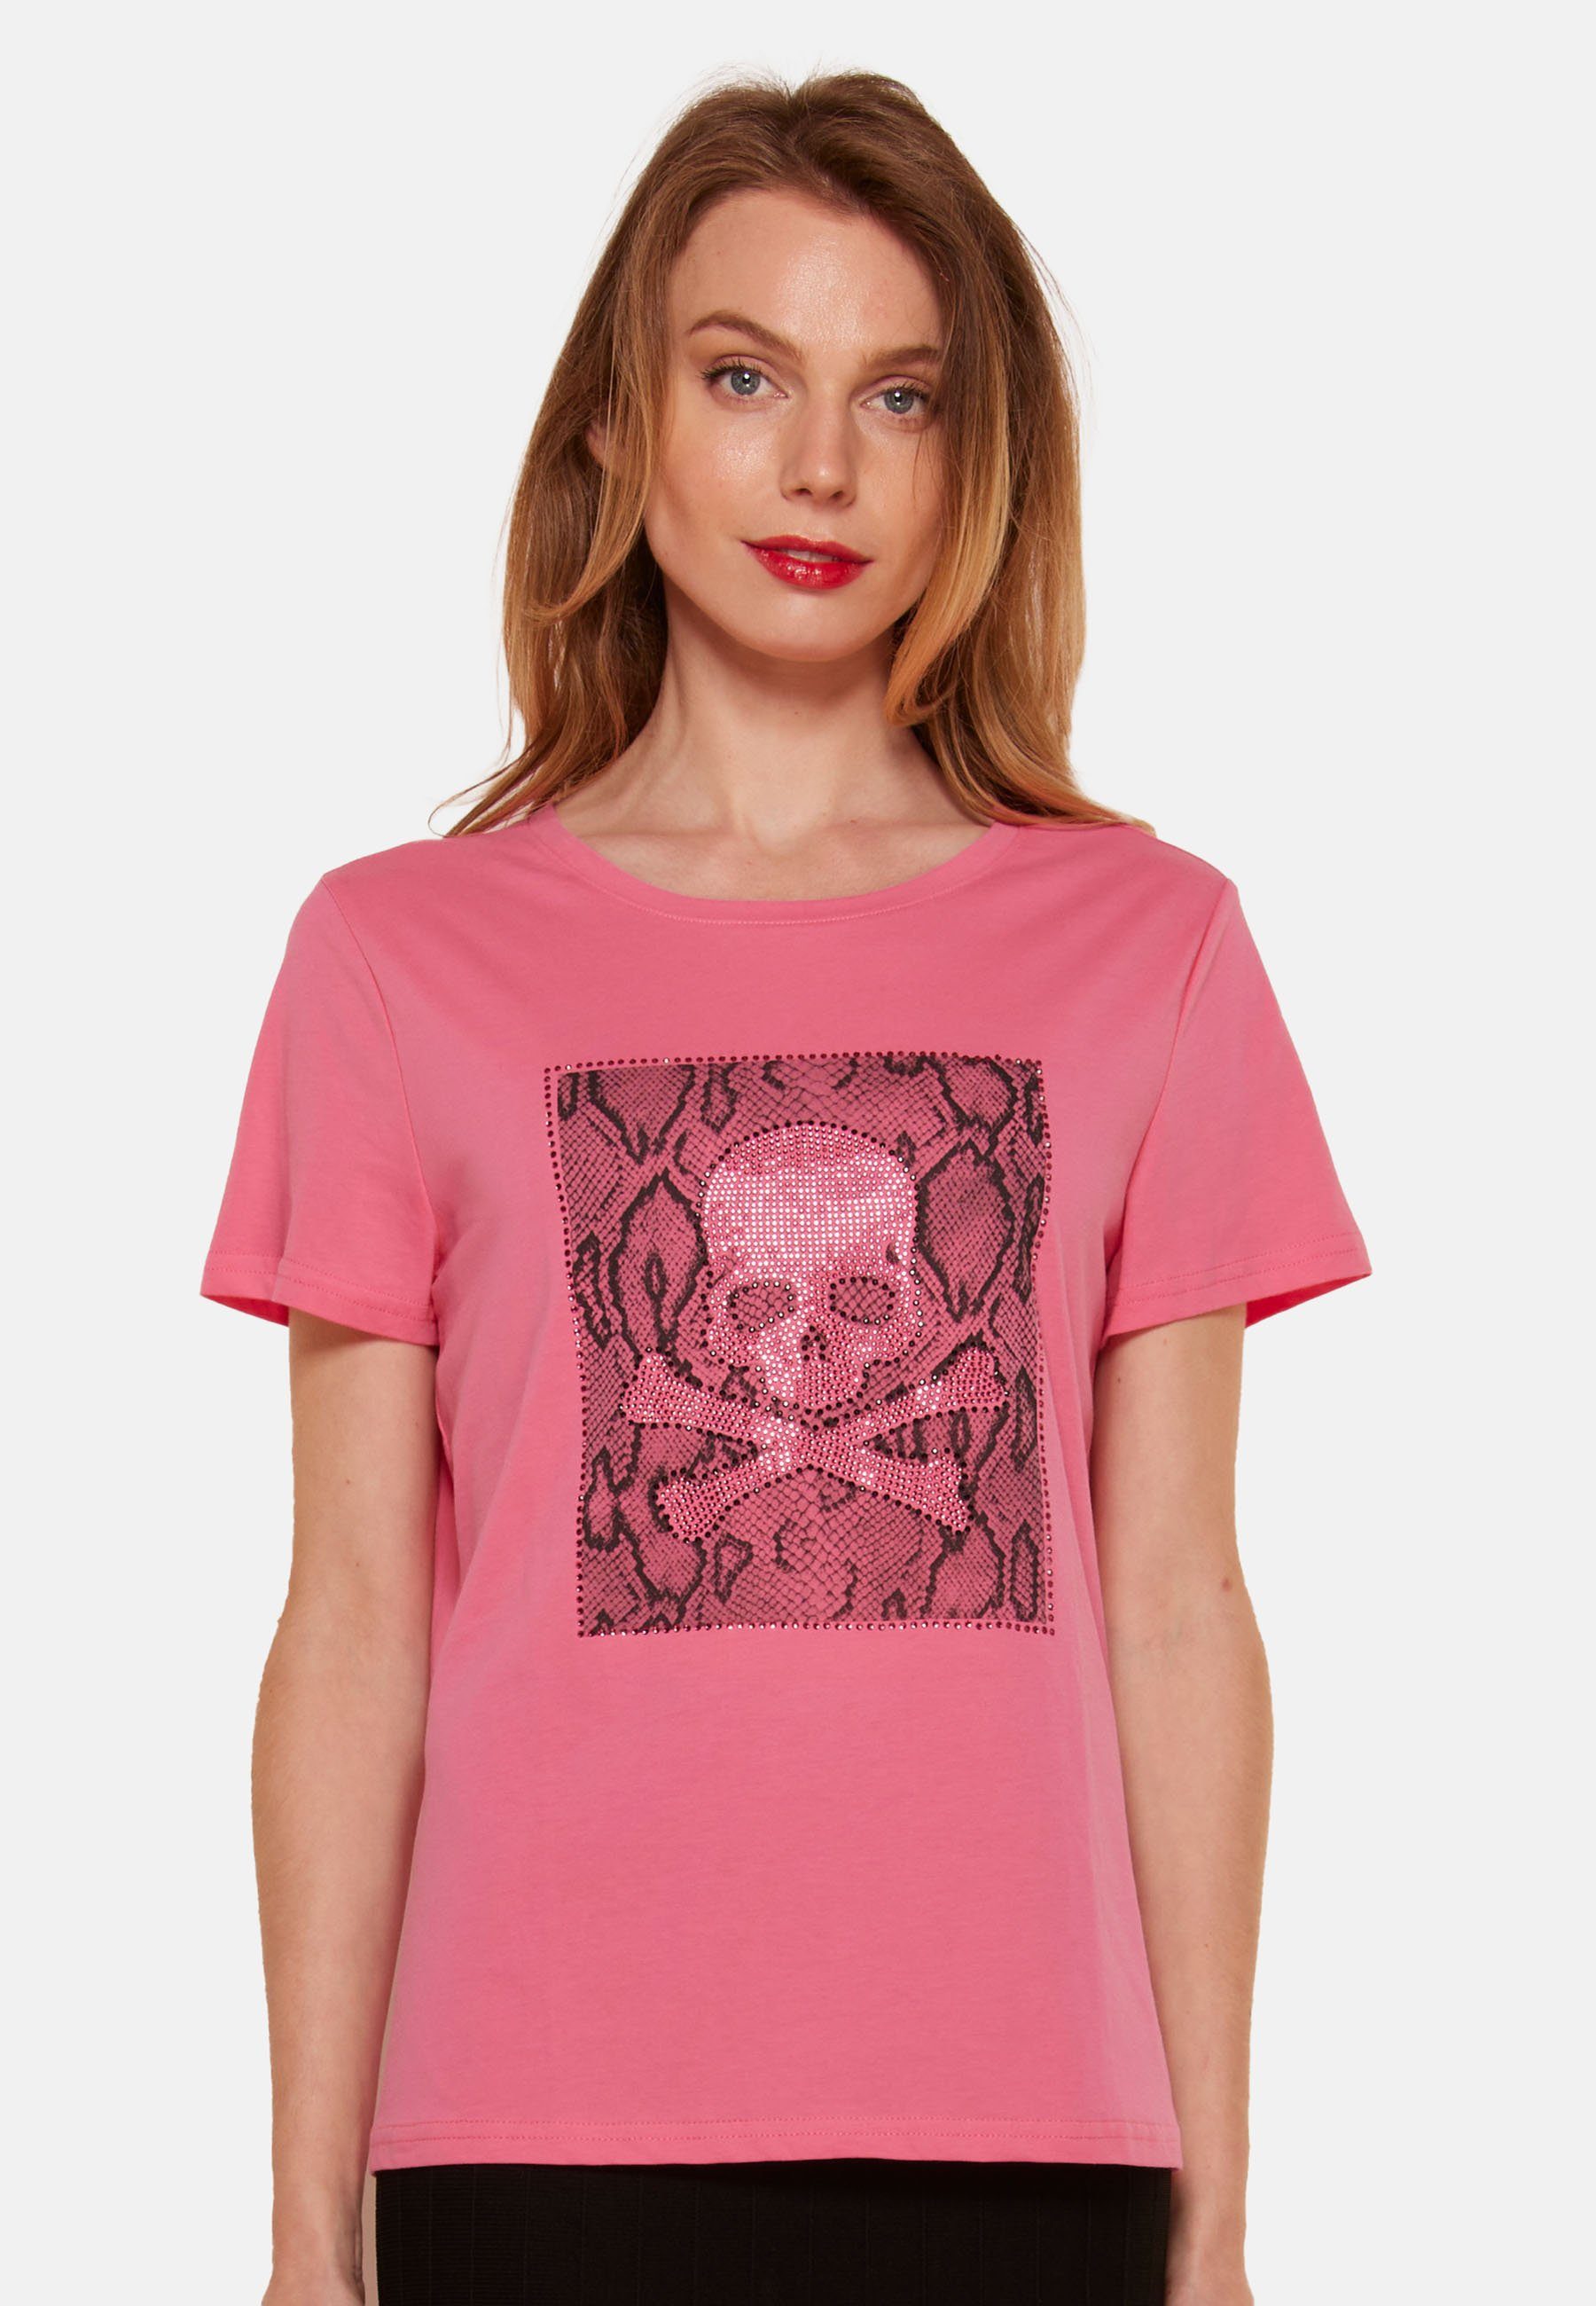 Tooche Print-Shirt T-shirt Totenkopf fuchsia